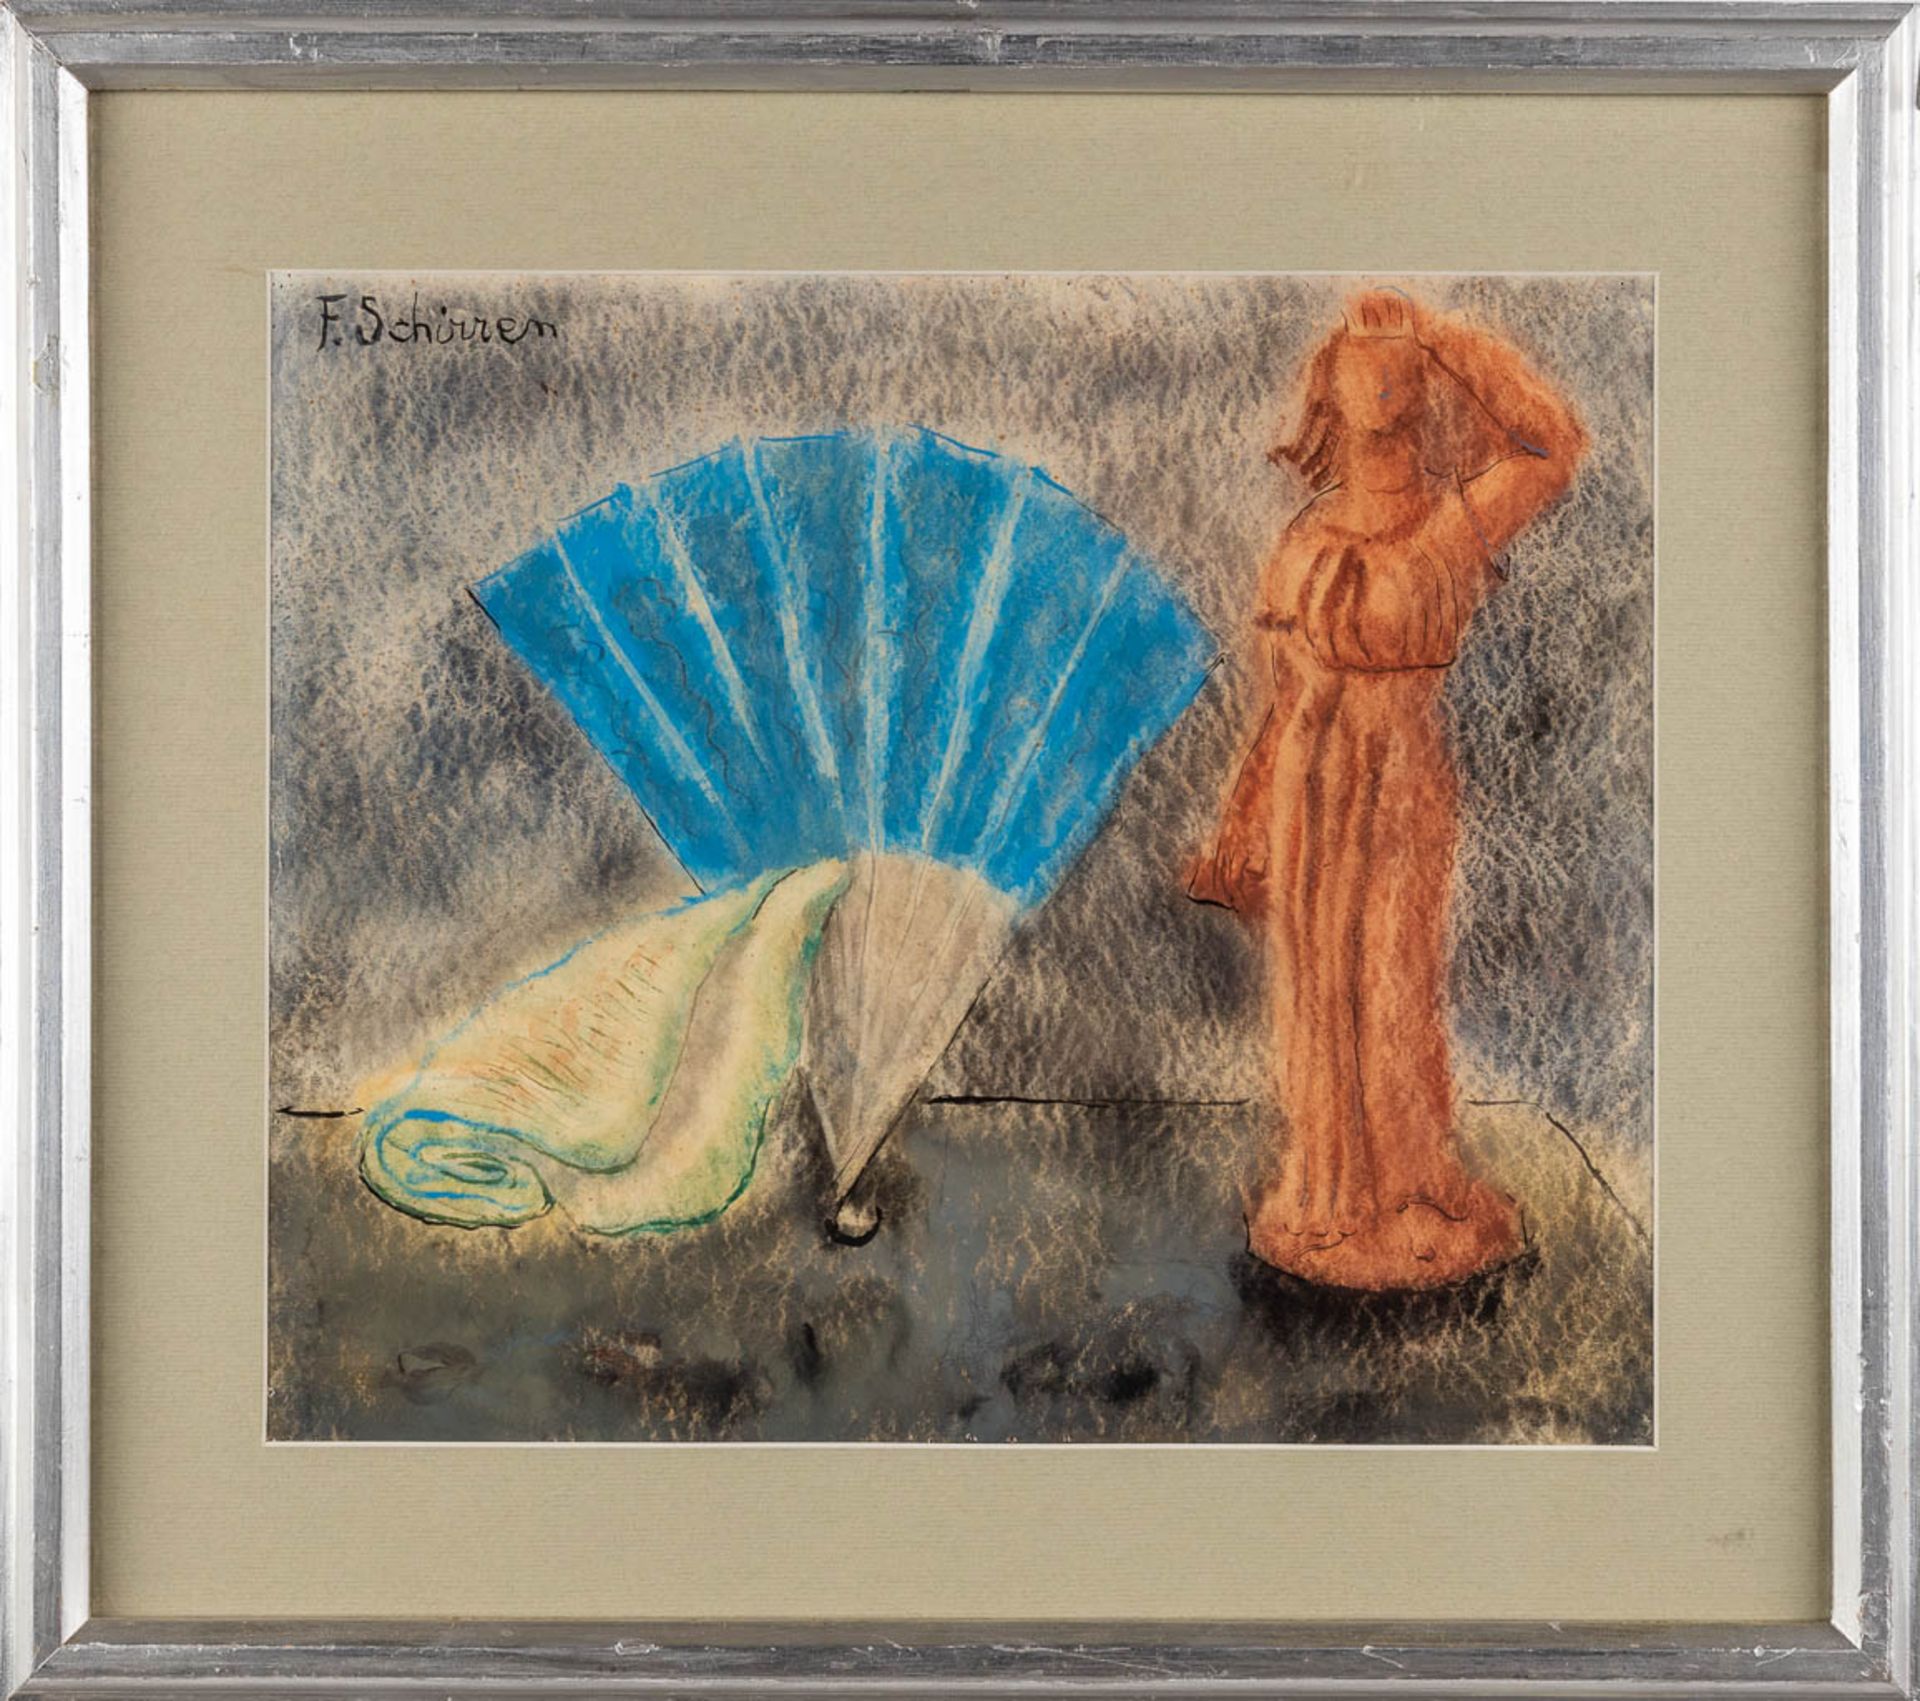 Ferdinand SCHIRREN (1872-1944) 'Still life with a fan' watercolour on paper. (W:41 x H:35 cm) - Image 3 of 7